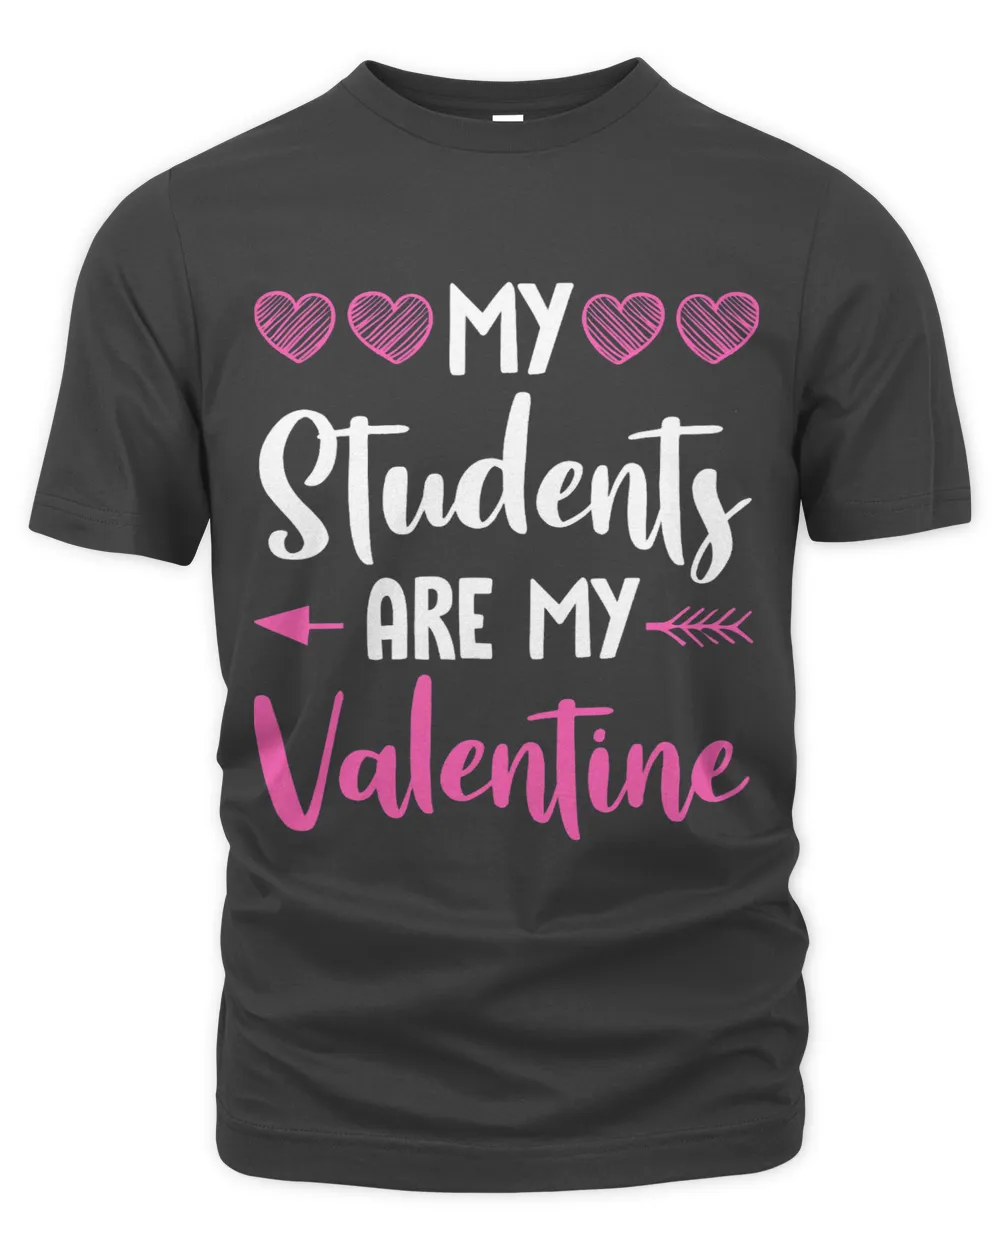 My Students Are My Valentine 2Teacher